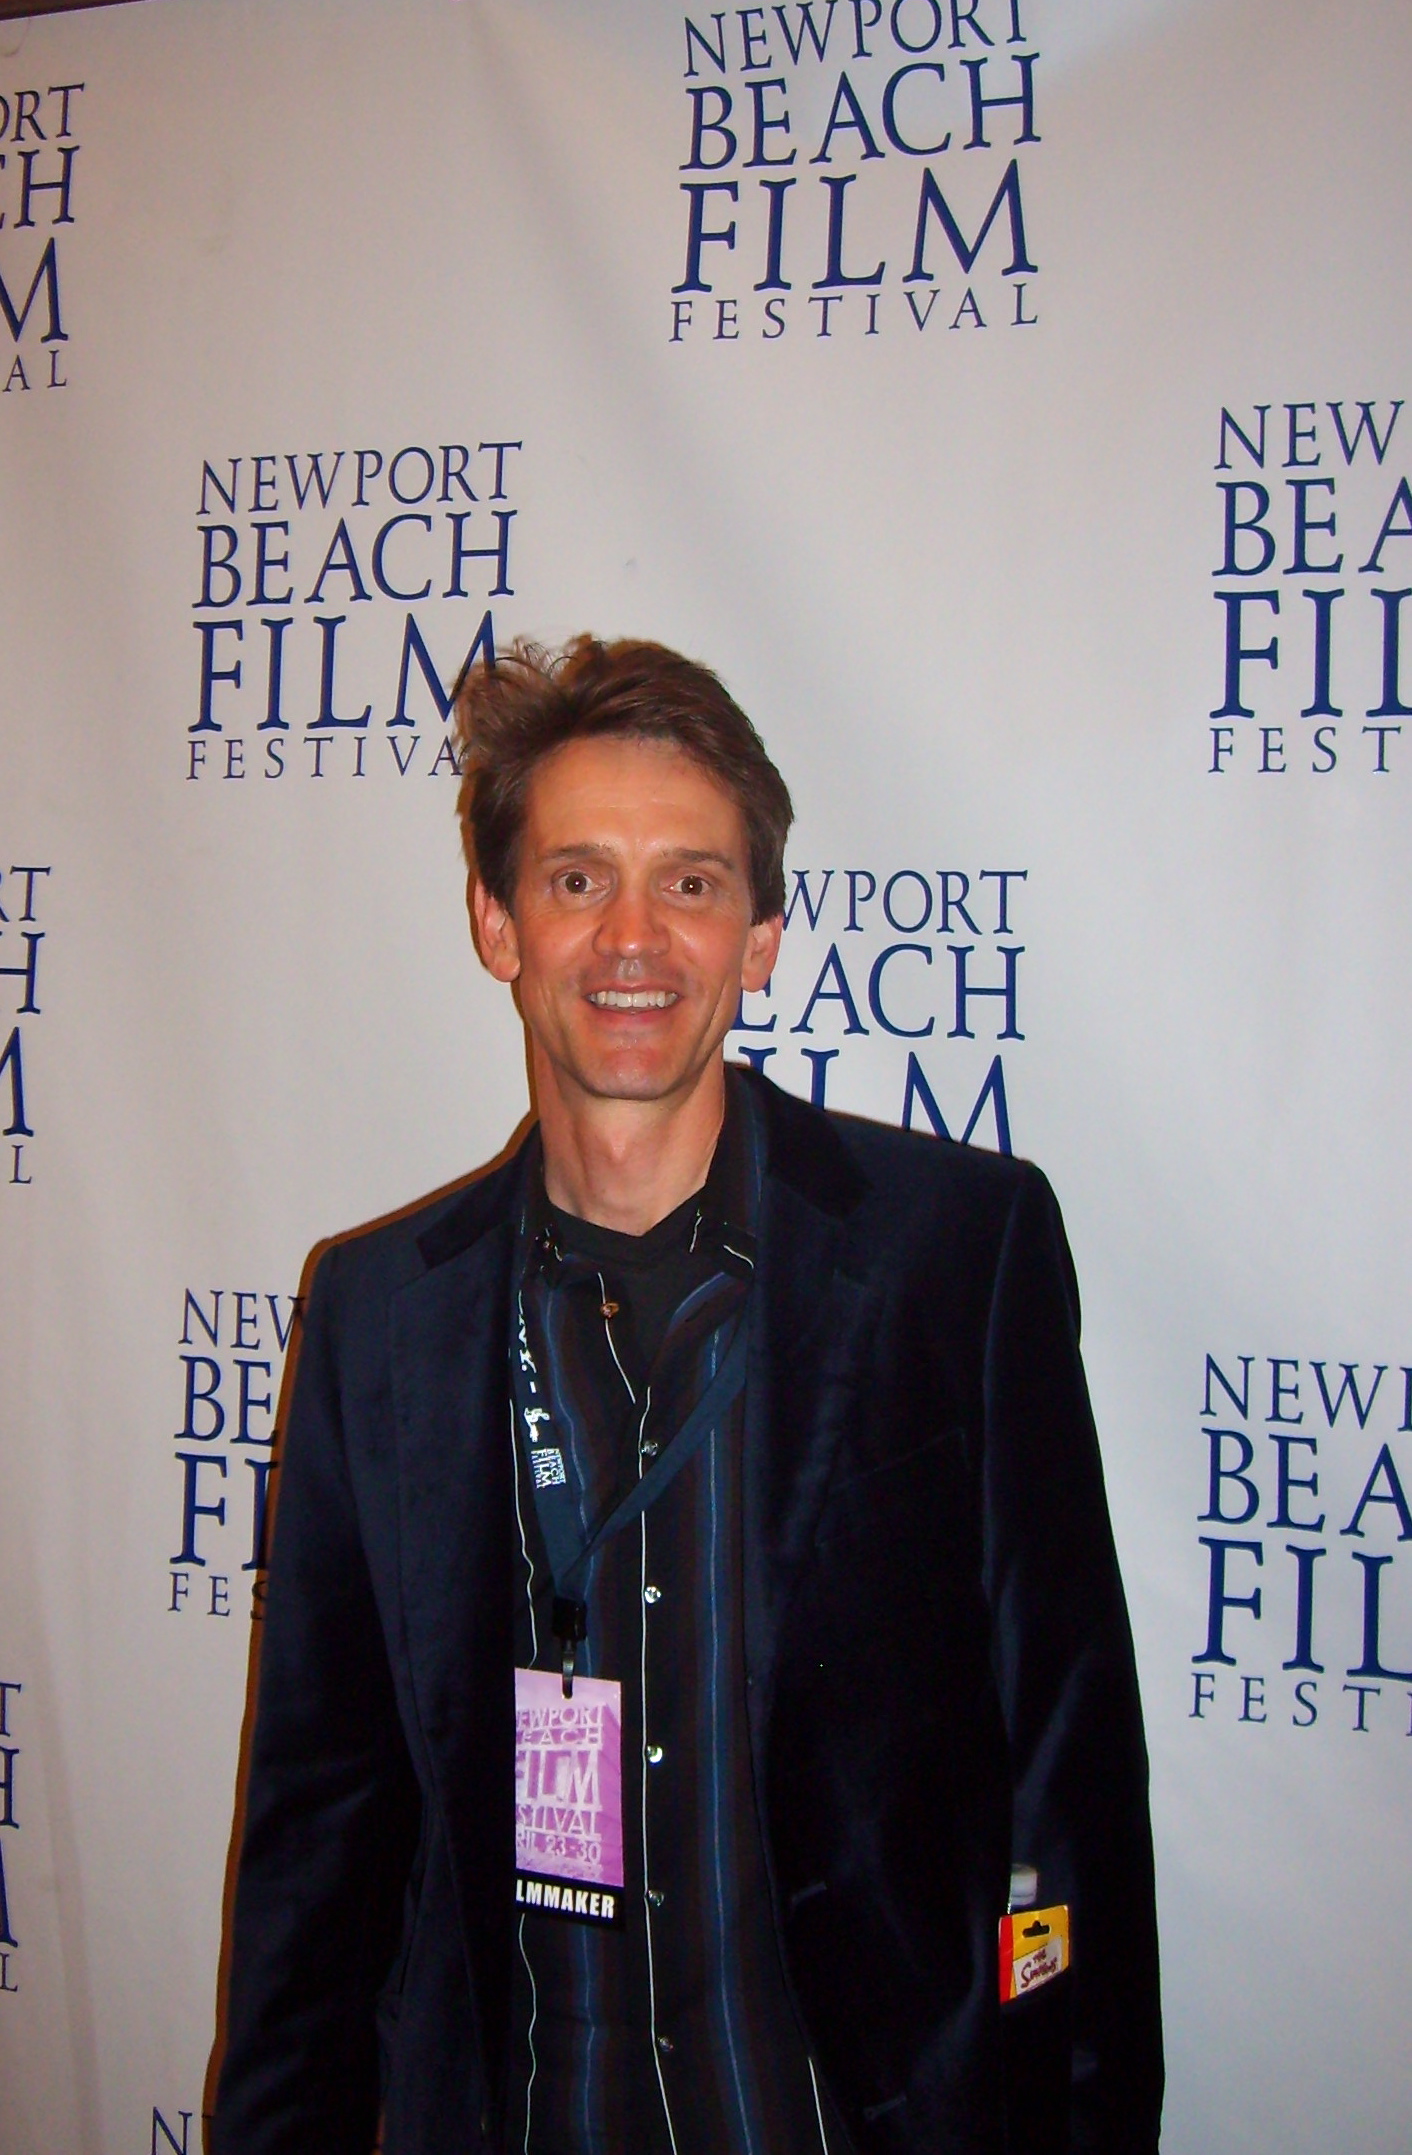 Vince Grant at Newport Beach Film Festival